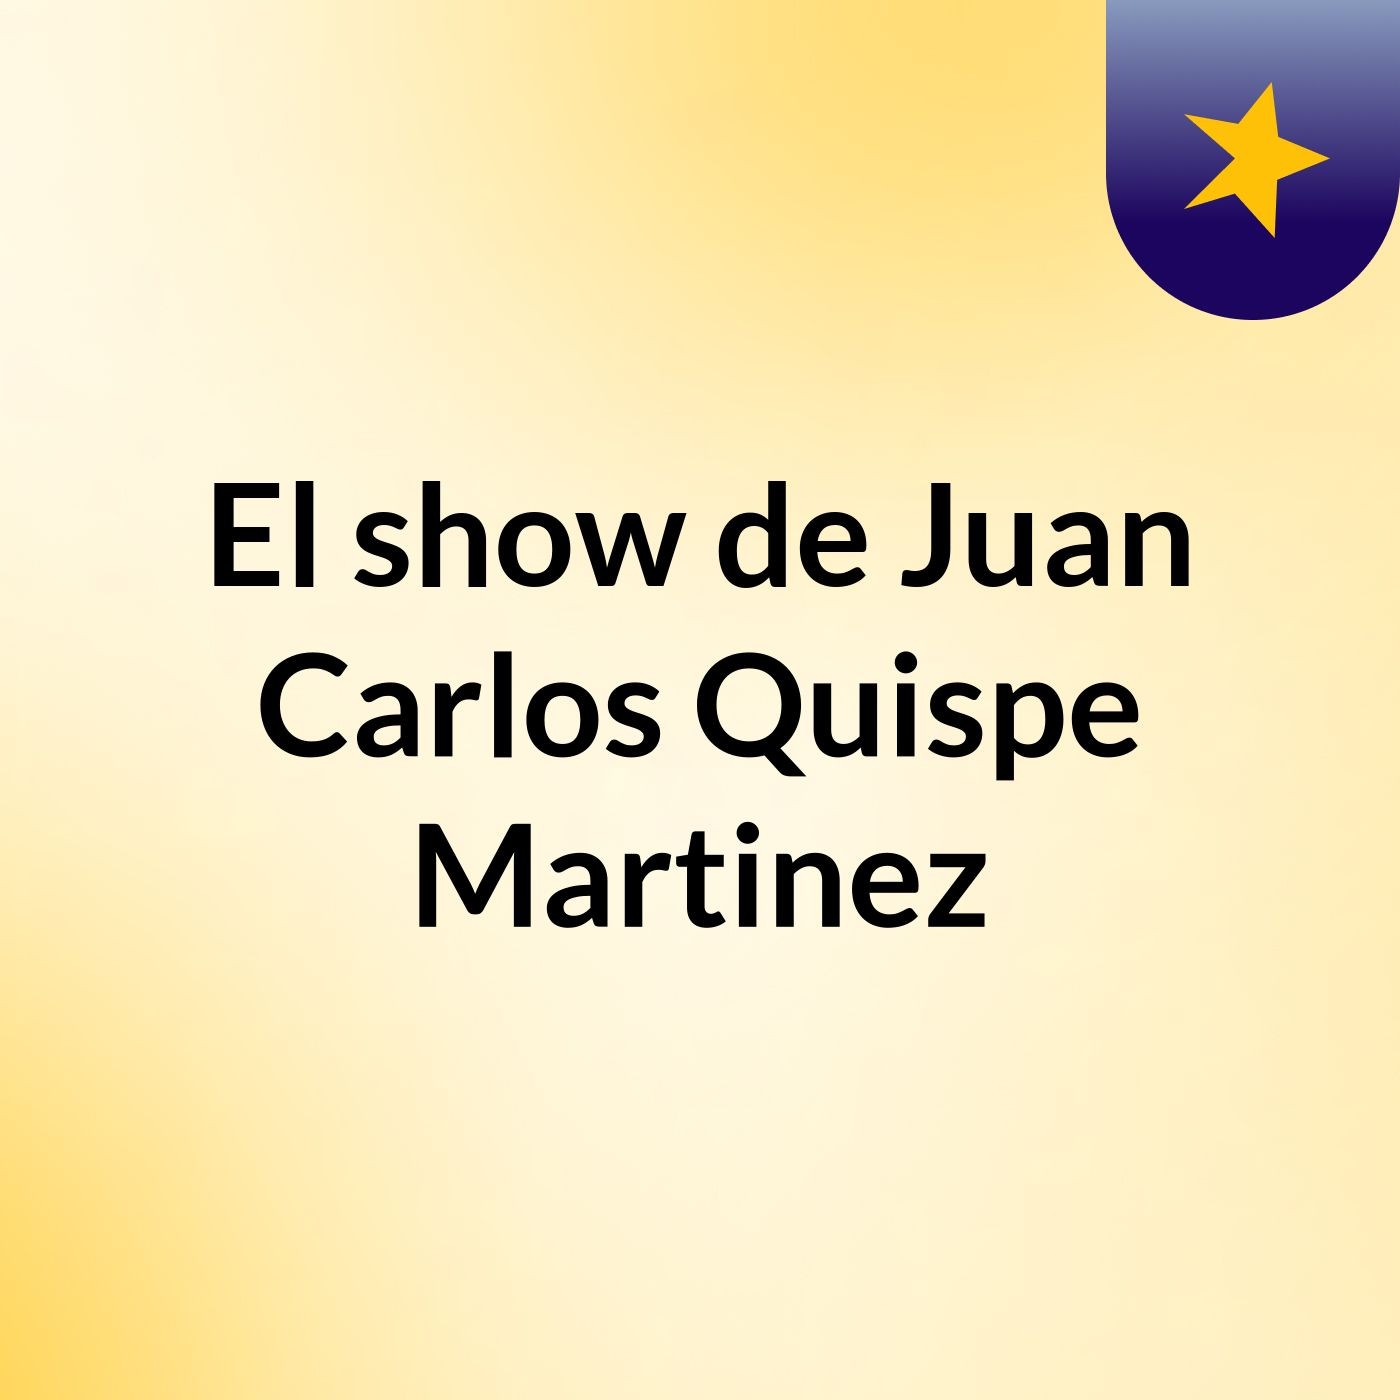 El show de Juan Carlos Quispe Martinez